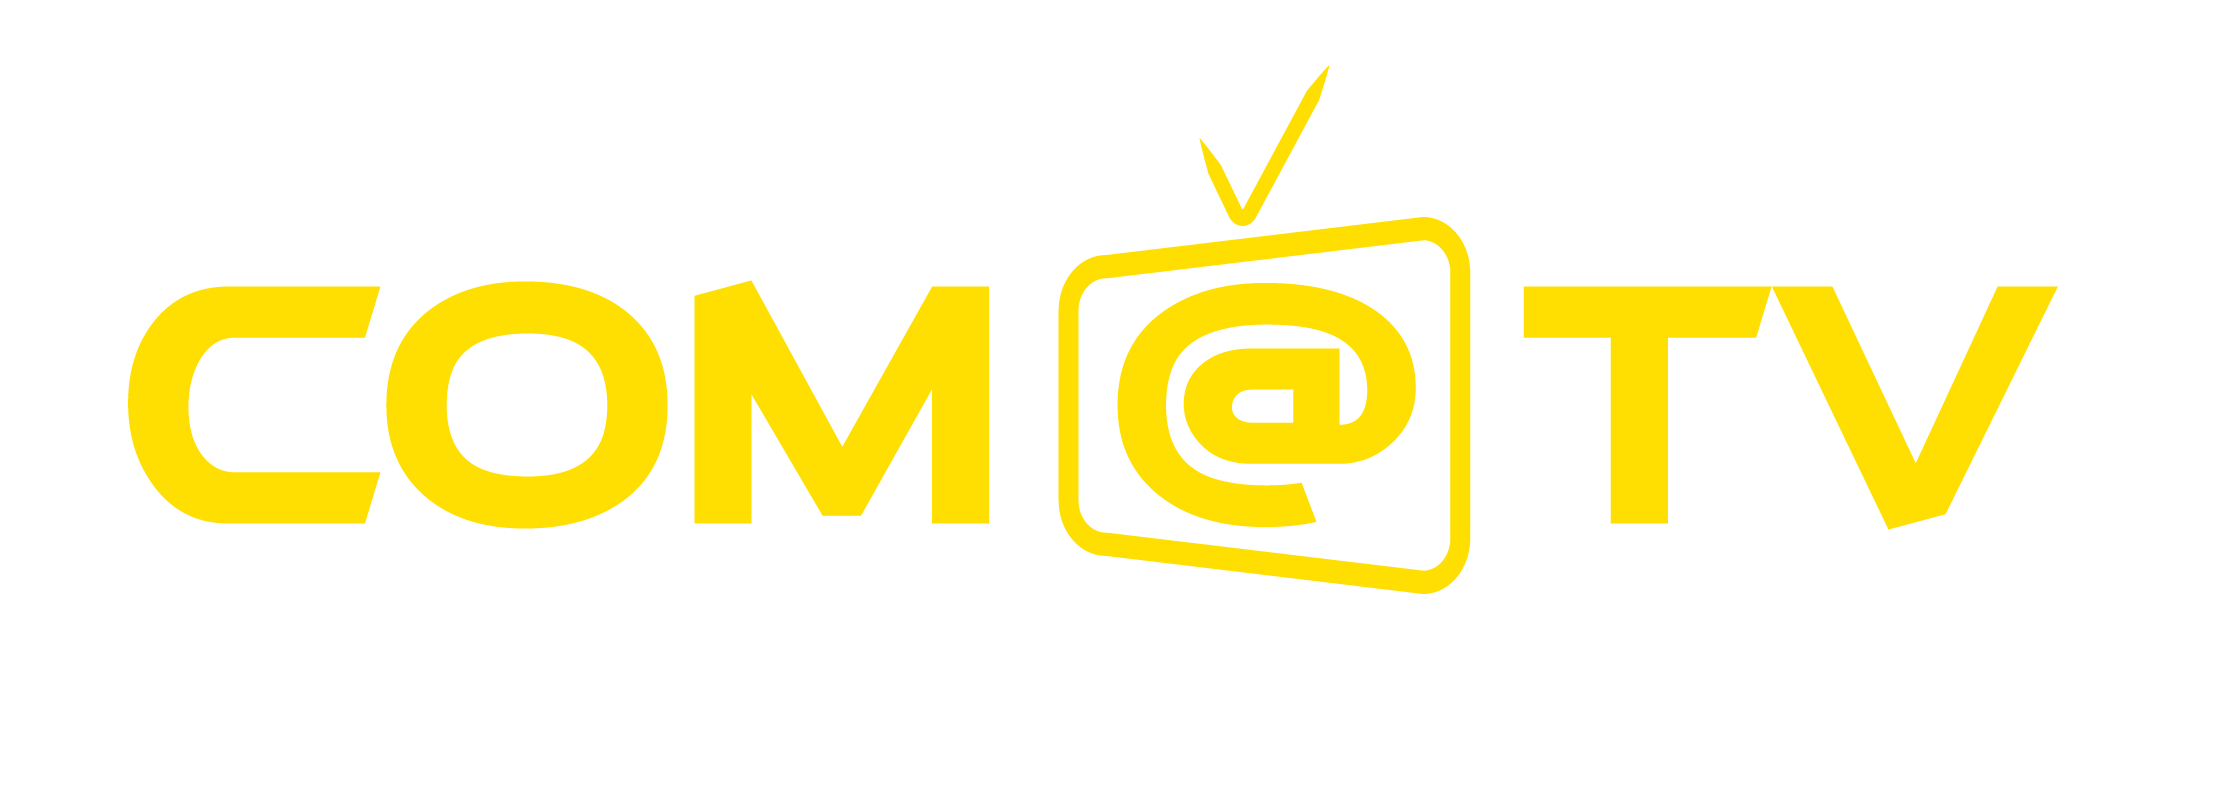 Logo Comatv officiel